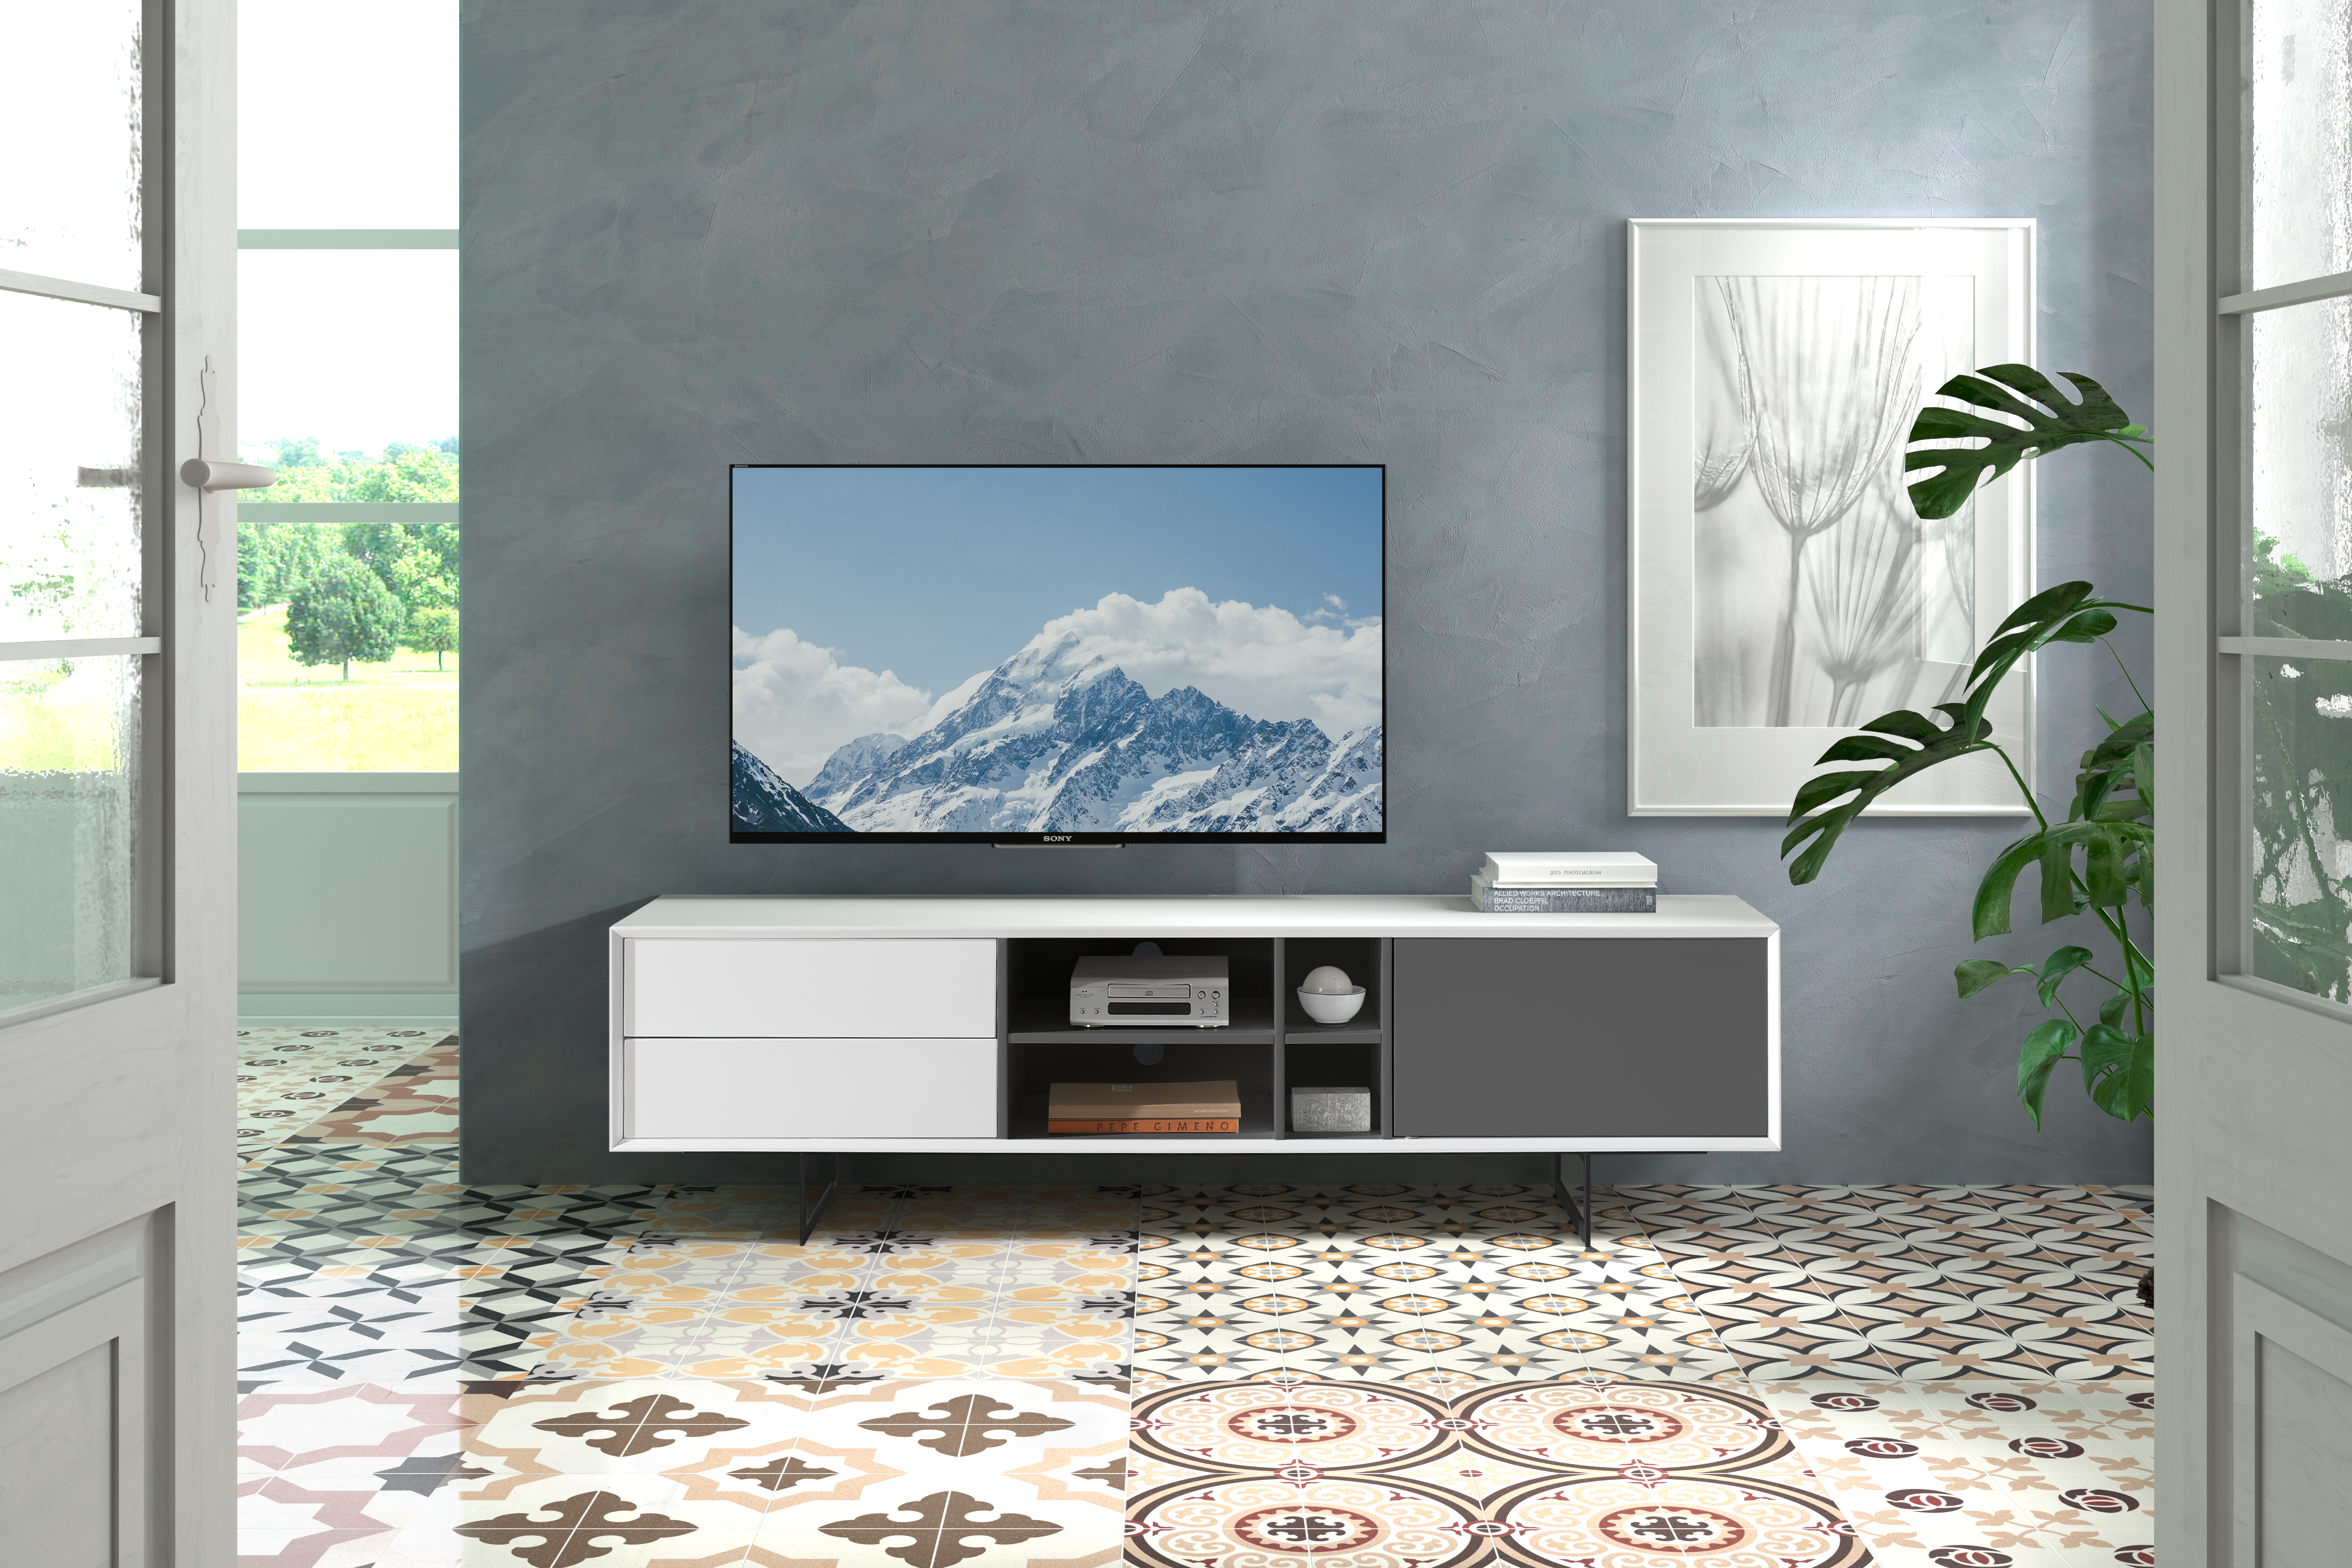 Brands Alexandra Heritage Living rooms TV-131 White